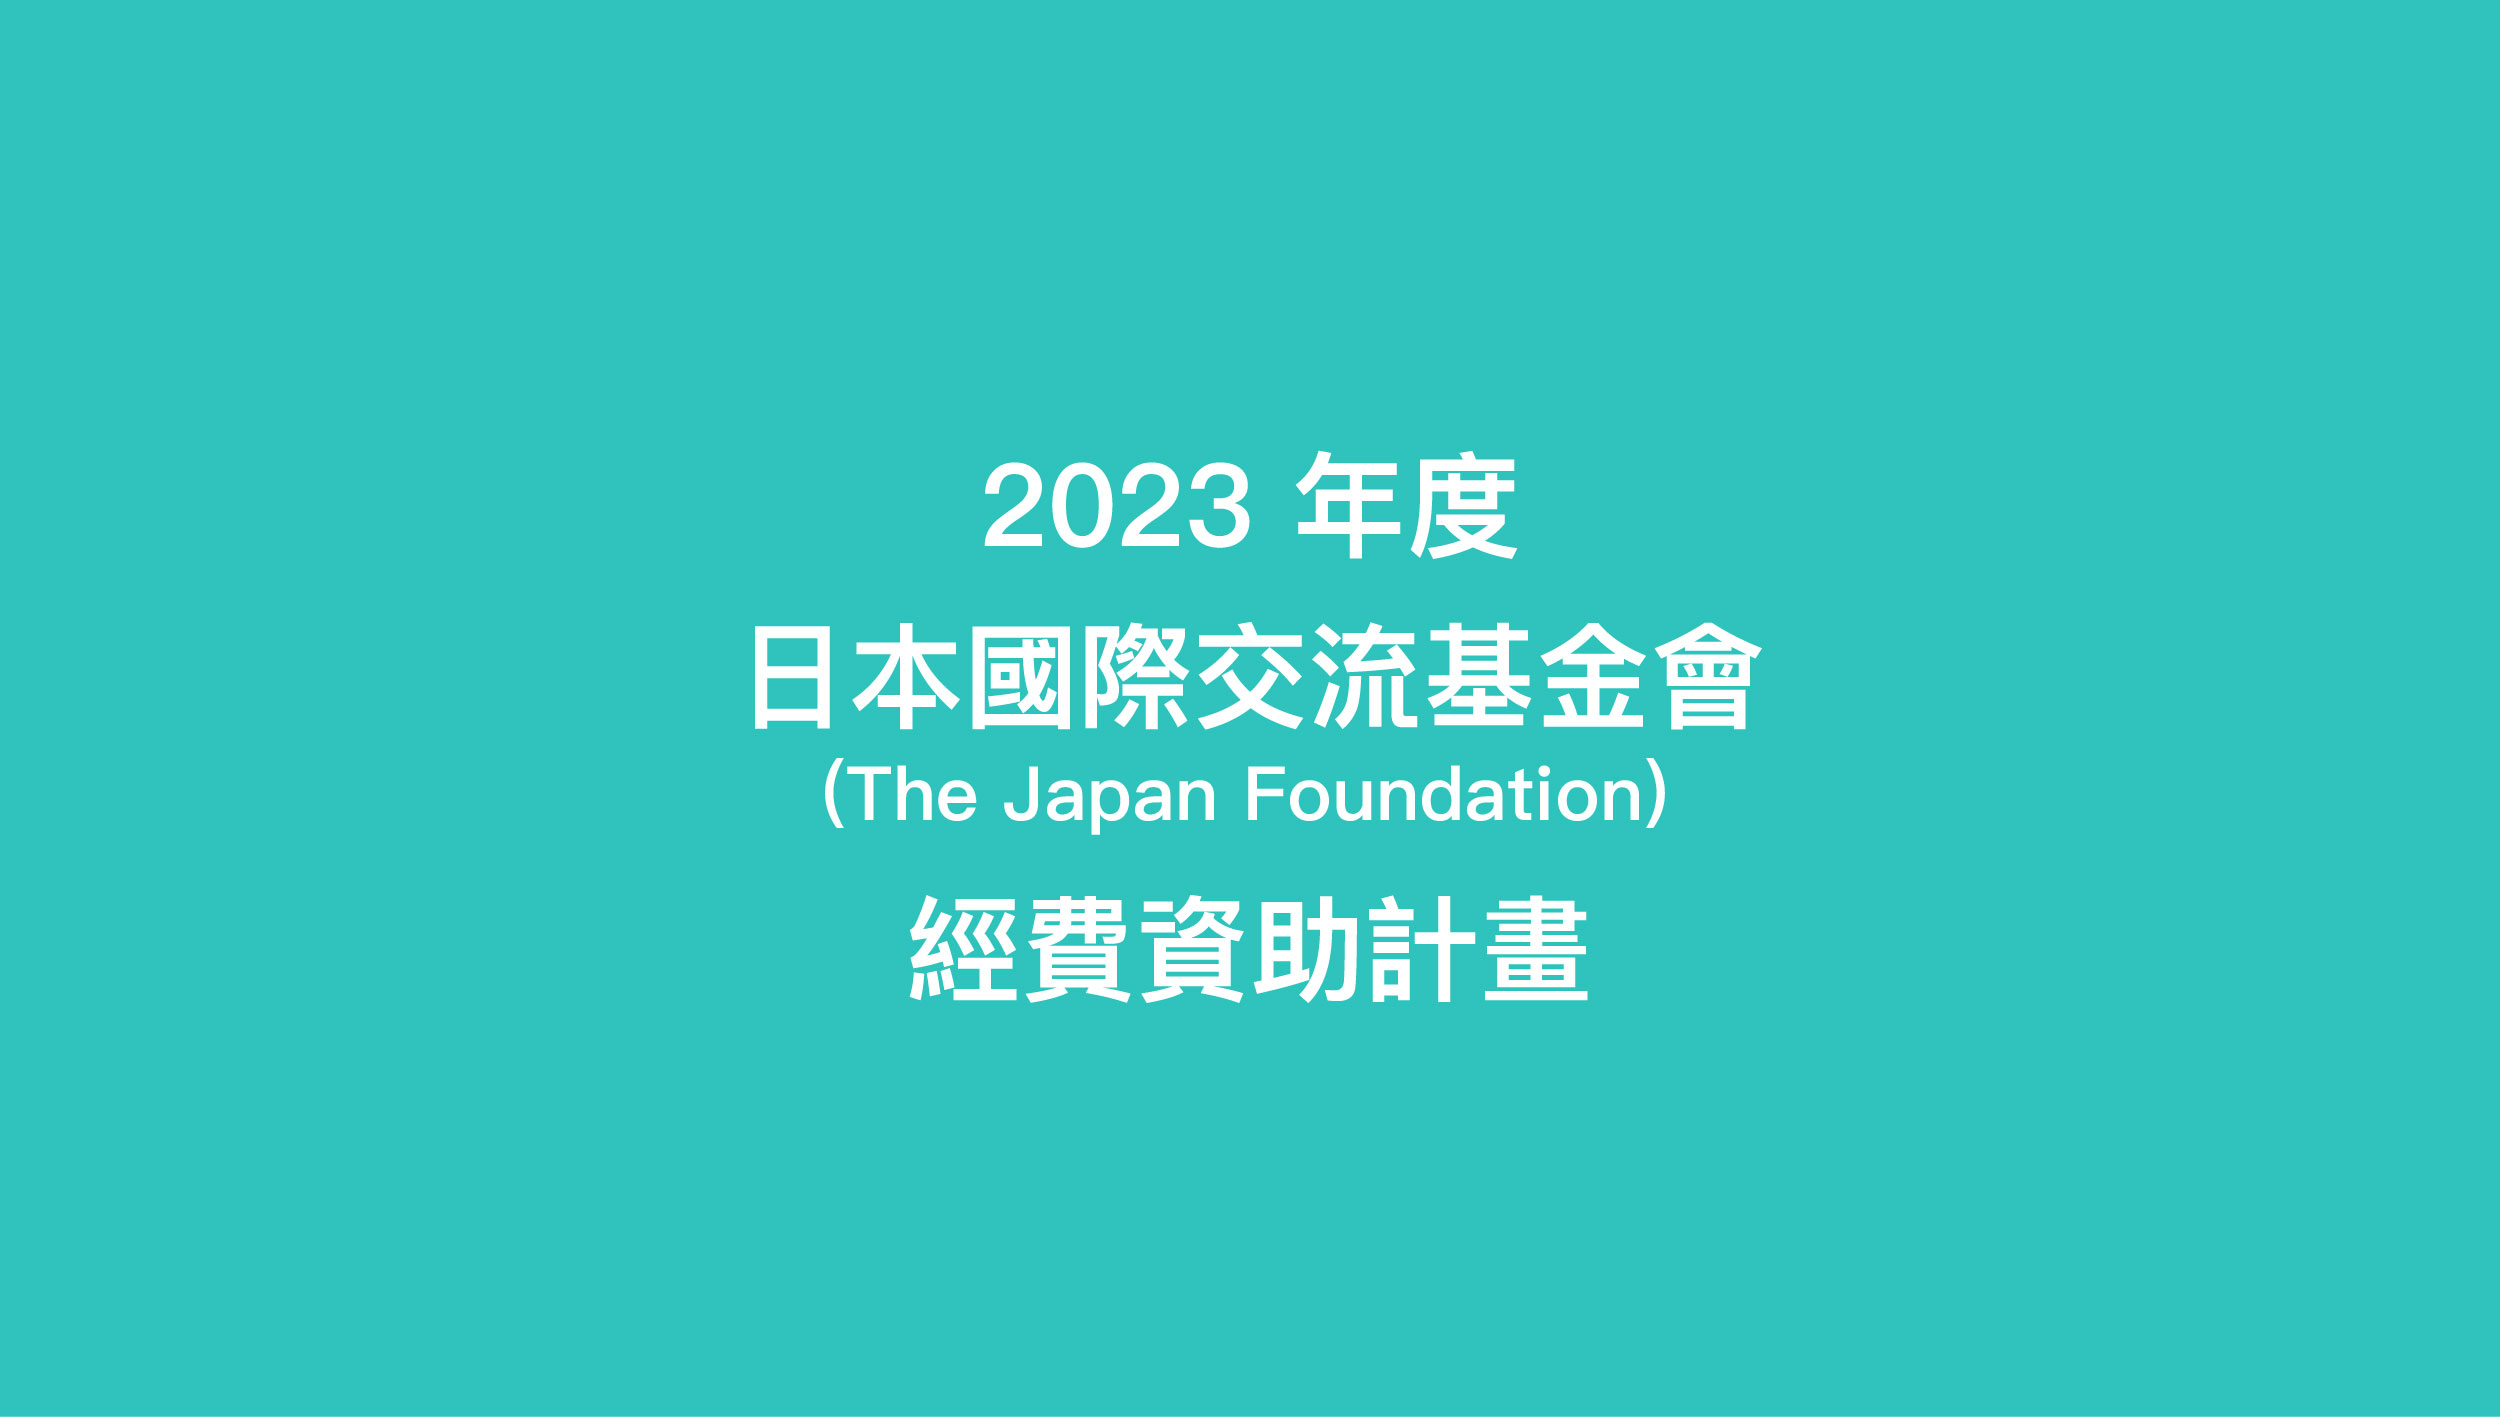 2023 年度日本國際交流基金會(The Japan Foundation)經費資助計畫